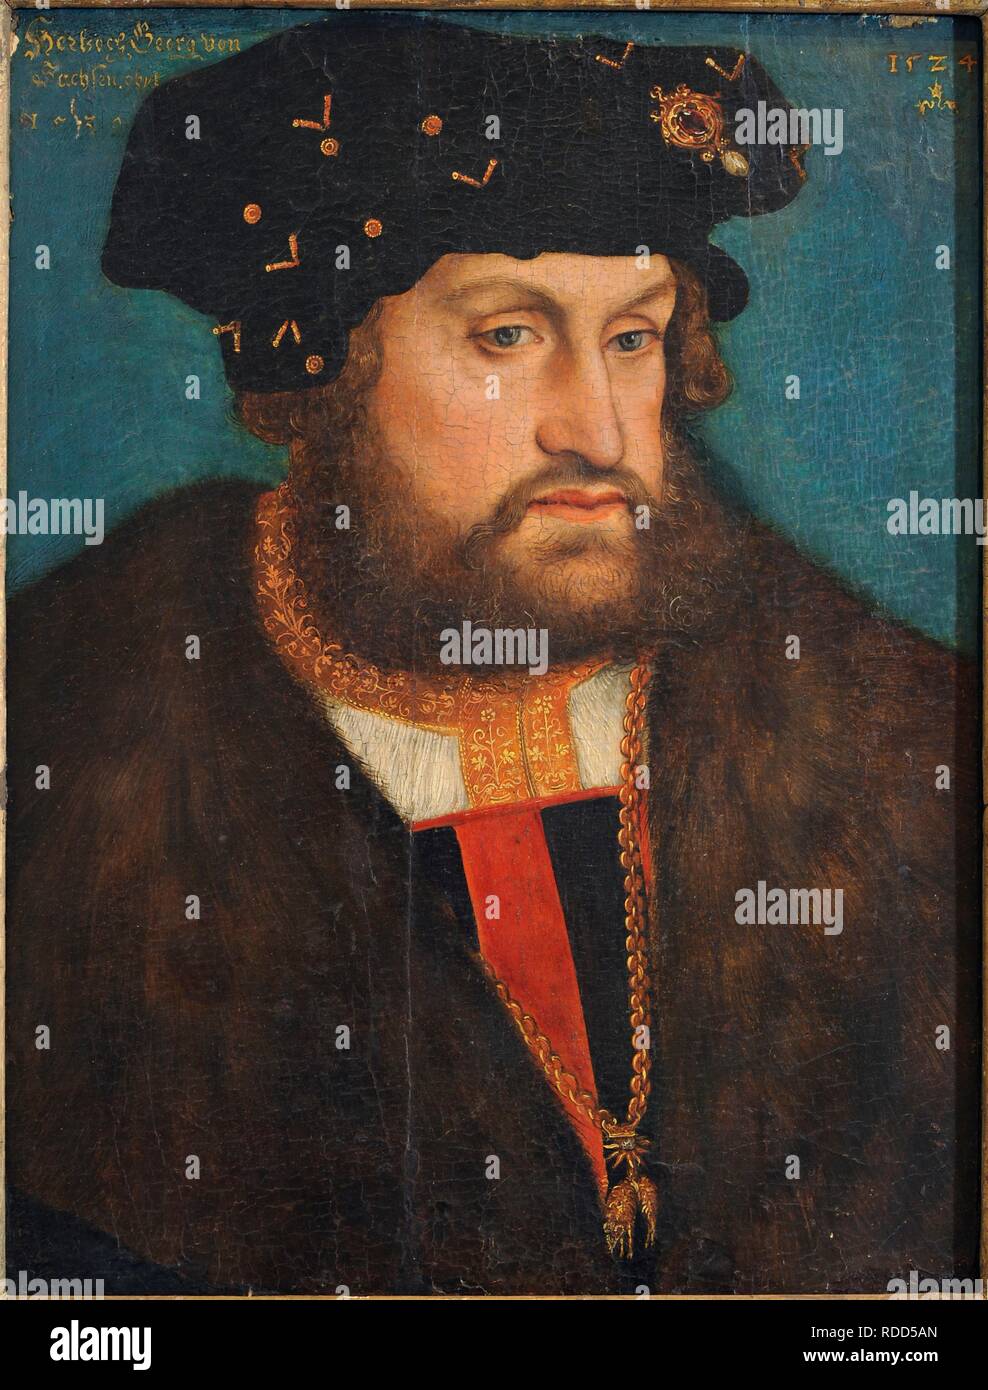 George the Bearded (1471-1539), Duke of Saxony. Museum: Veste Coburg. Author: Cranach, Lucas, the Elder. Stock Photo